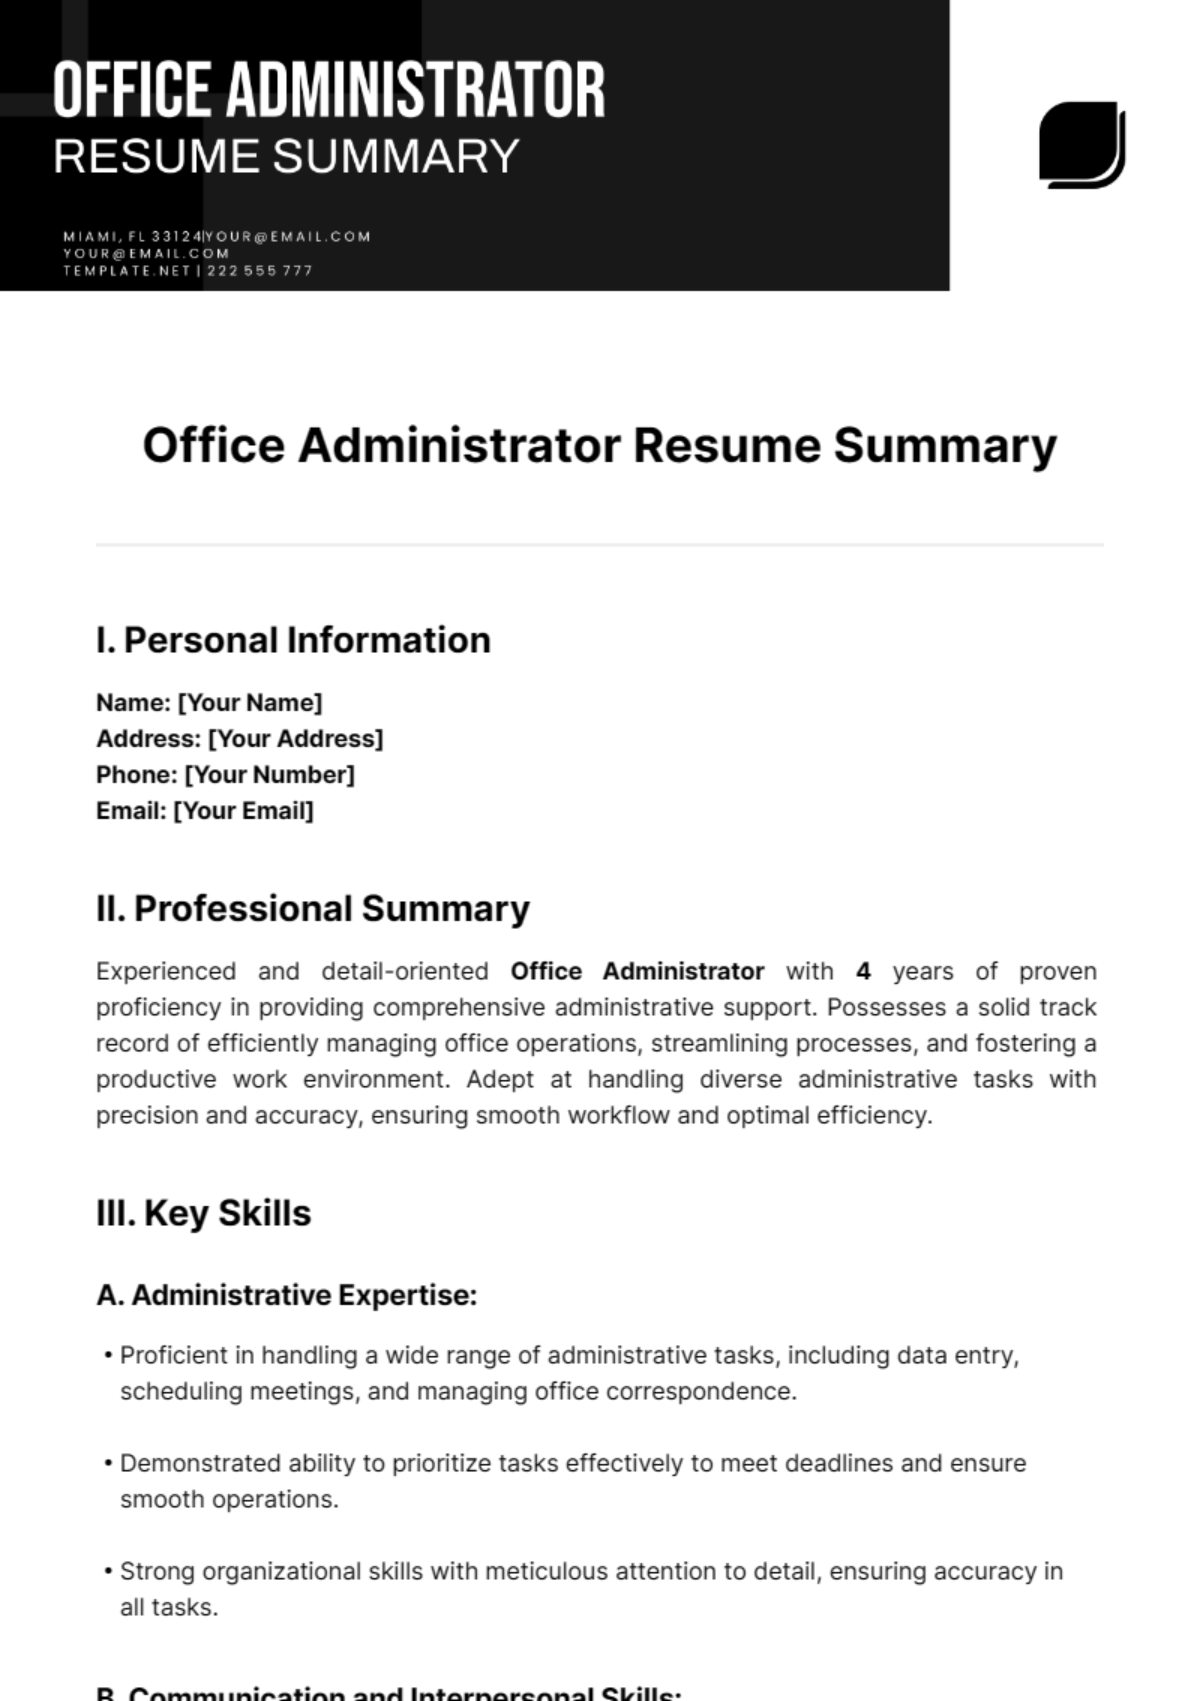 Office Administrator Resume Summary Template